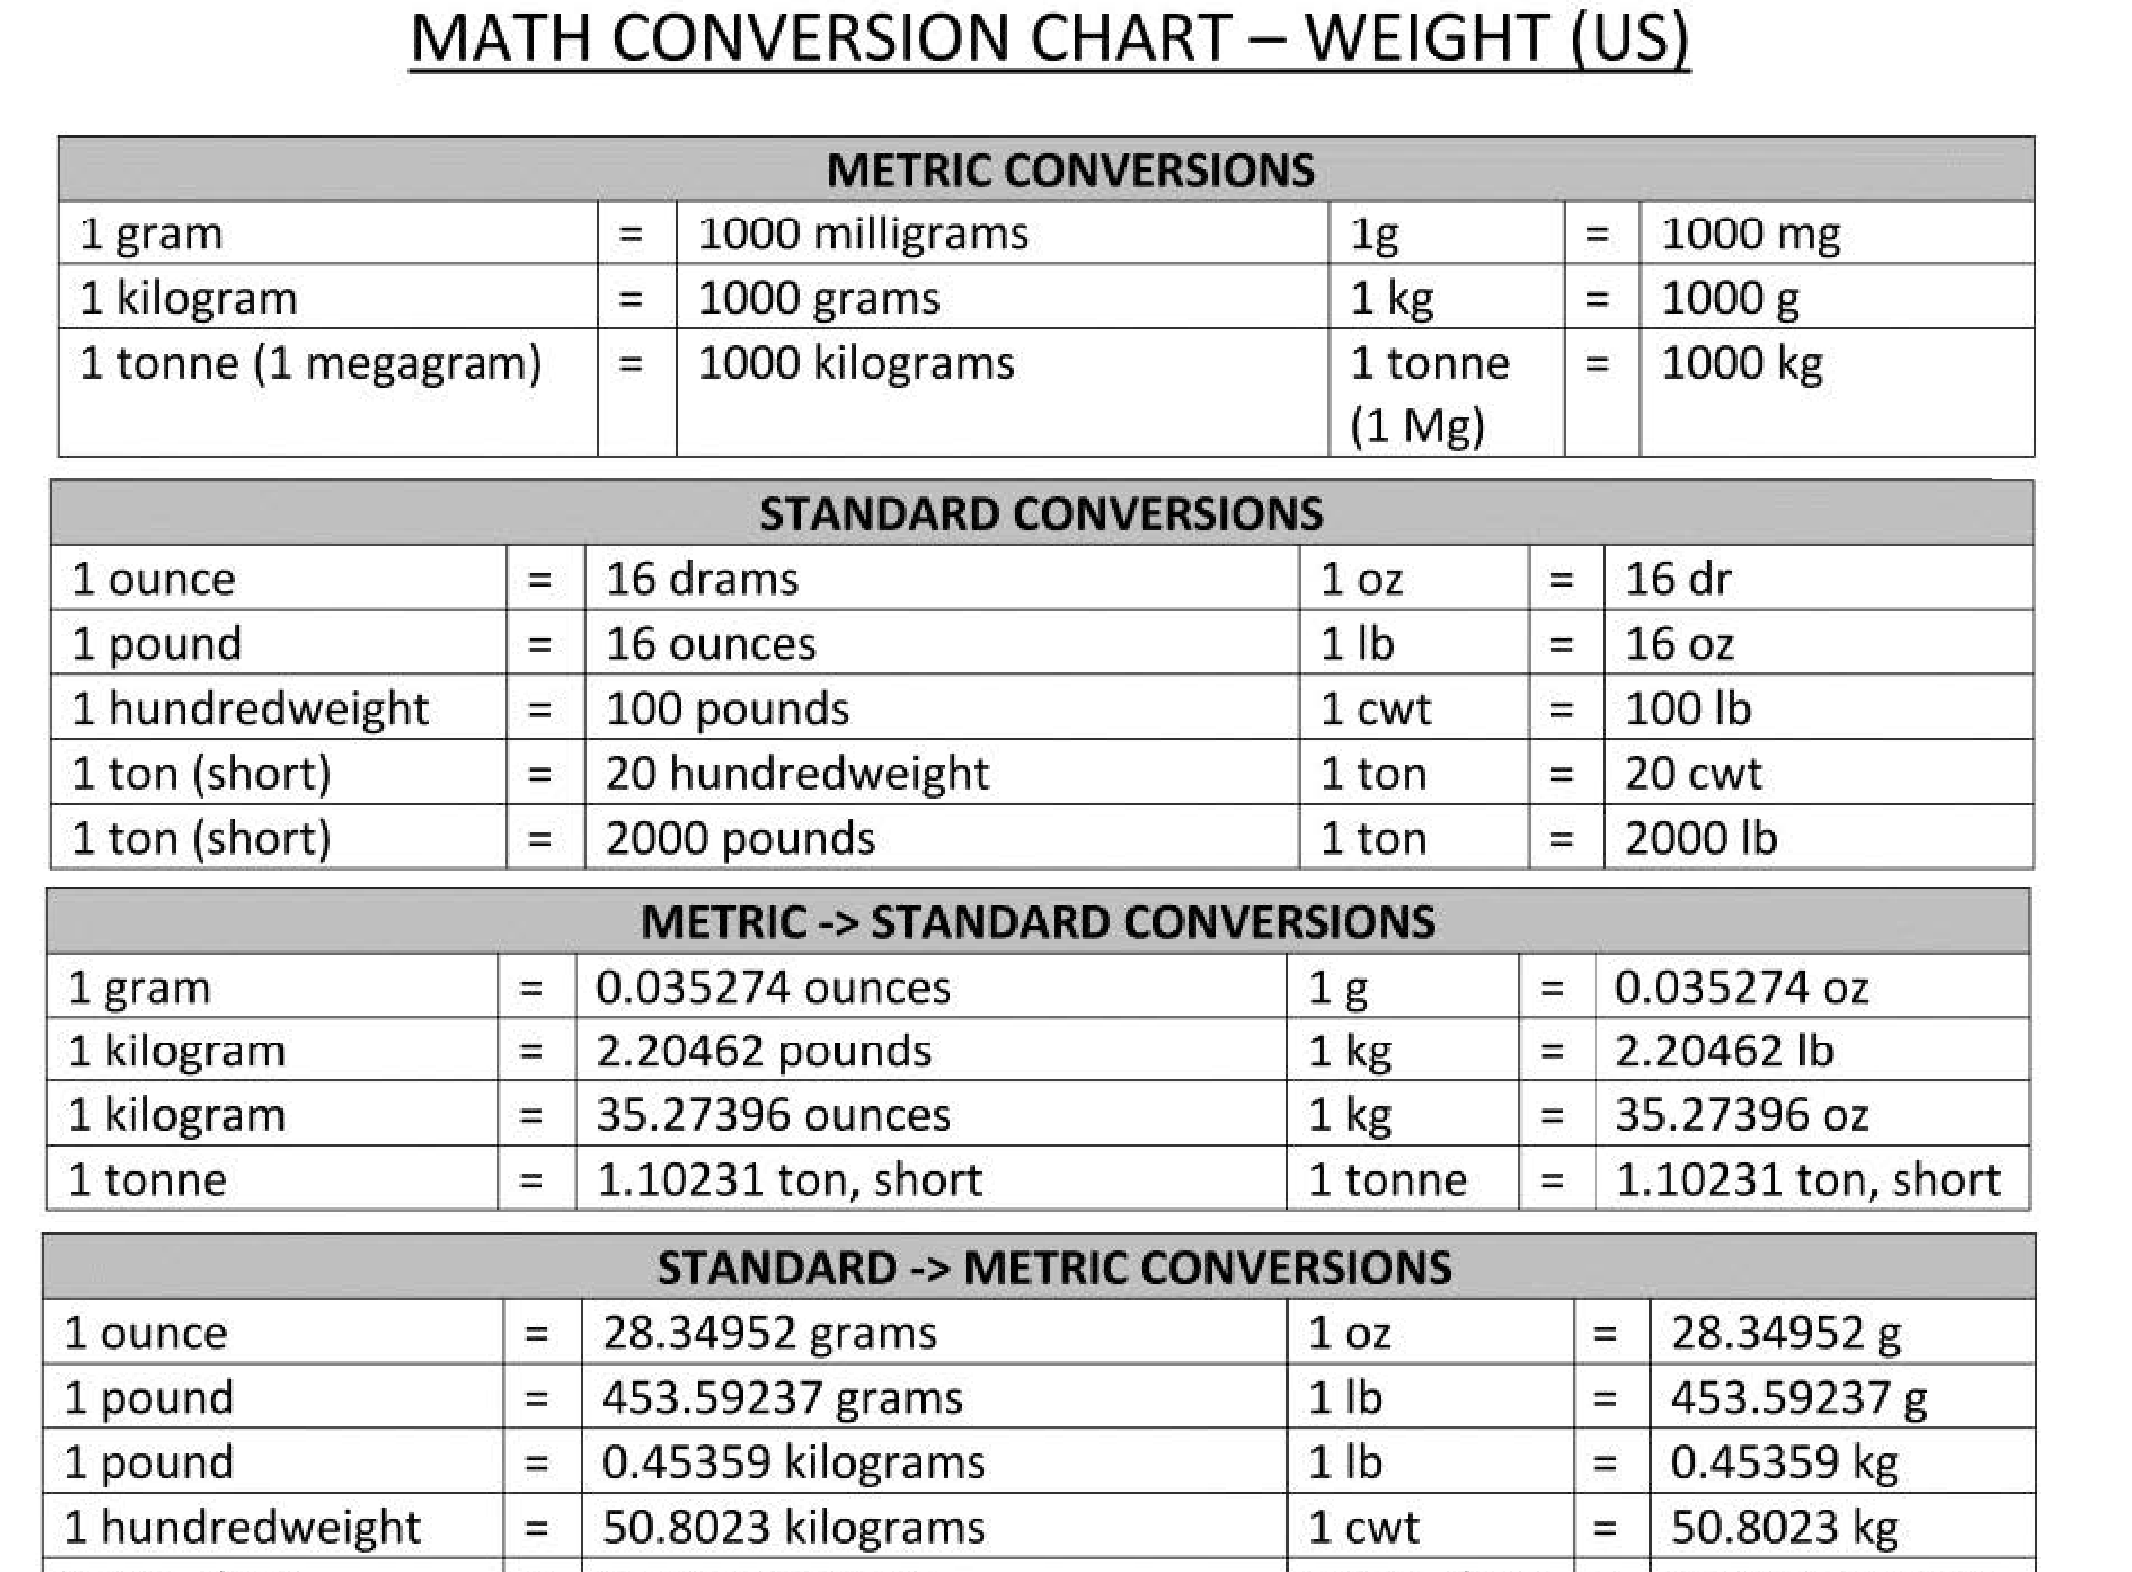 Math Conversion Chart